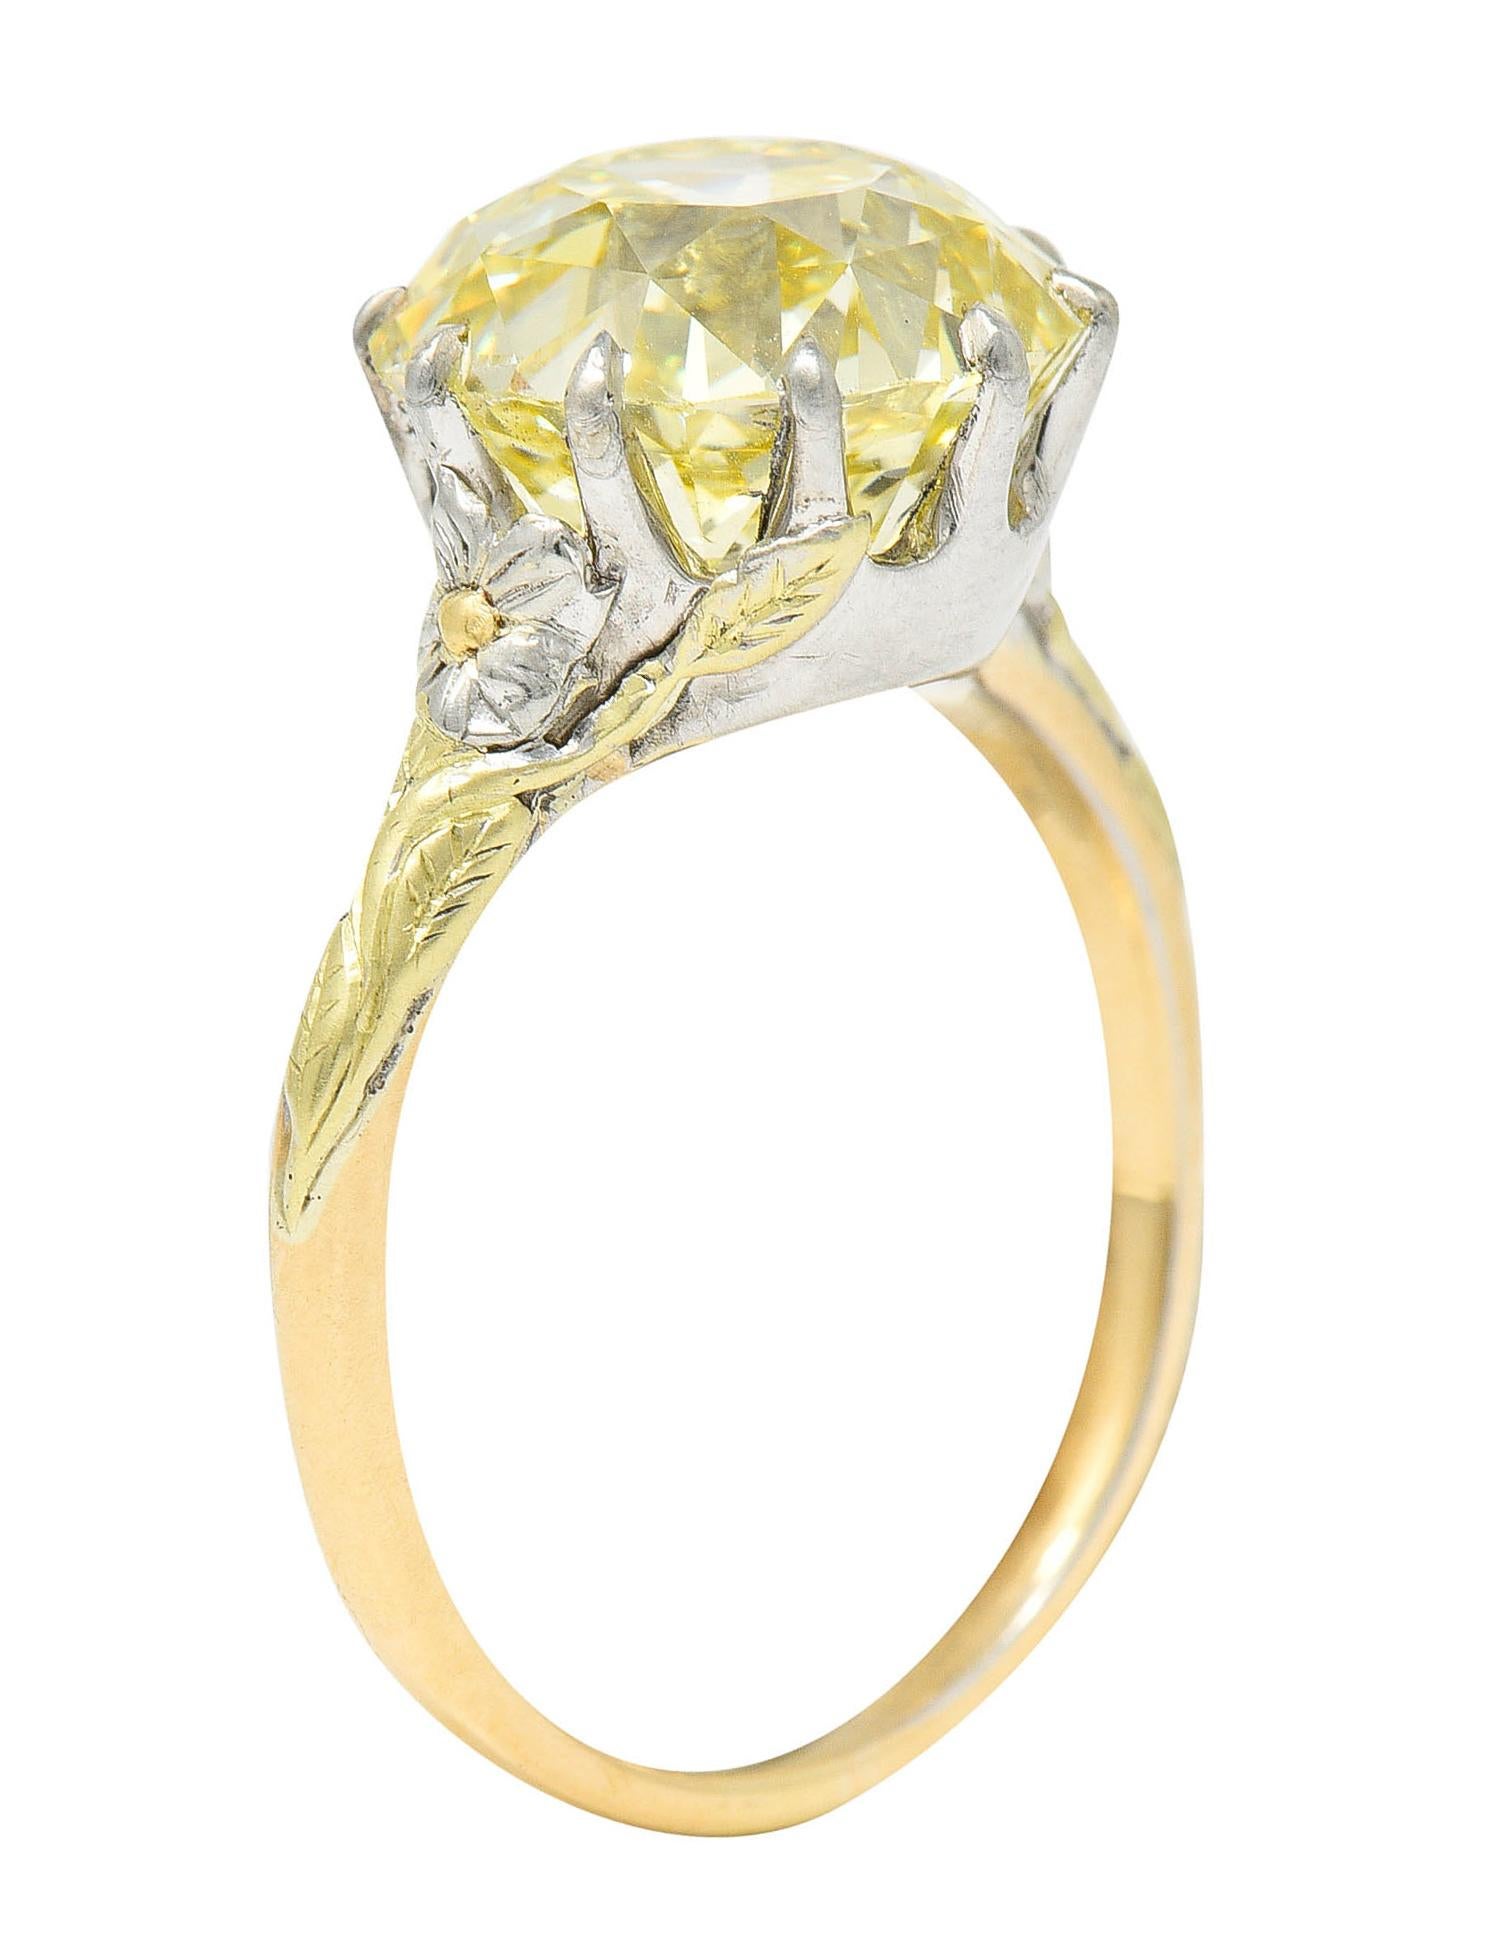 Arts & Crafts 7.12 Carats Fancy Yellow Diamond 14 Karat Tri-Colored Gold Ring 2